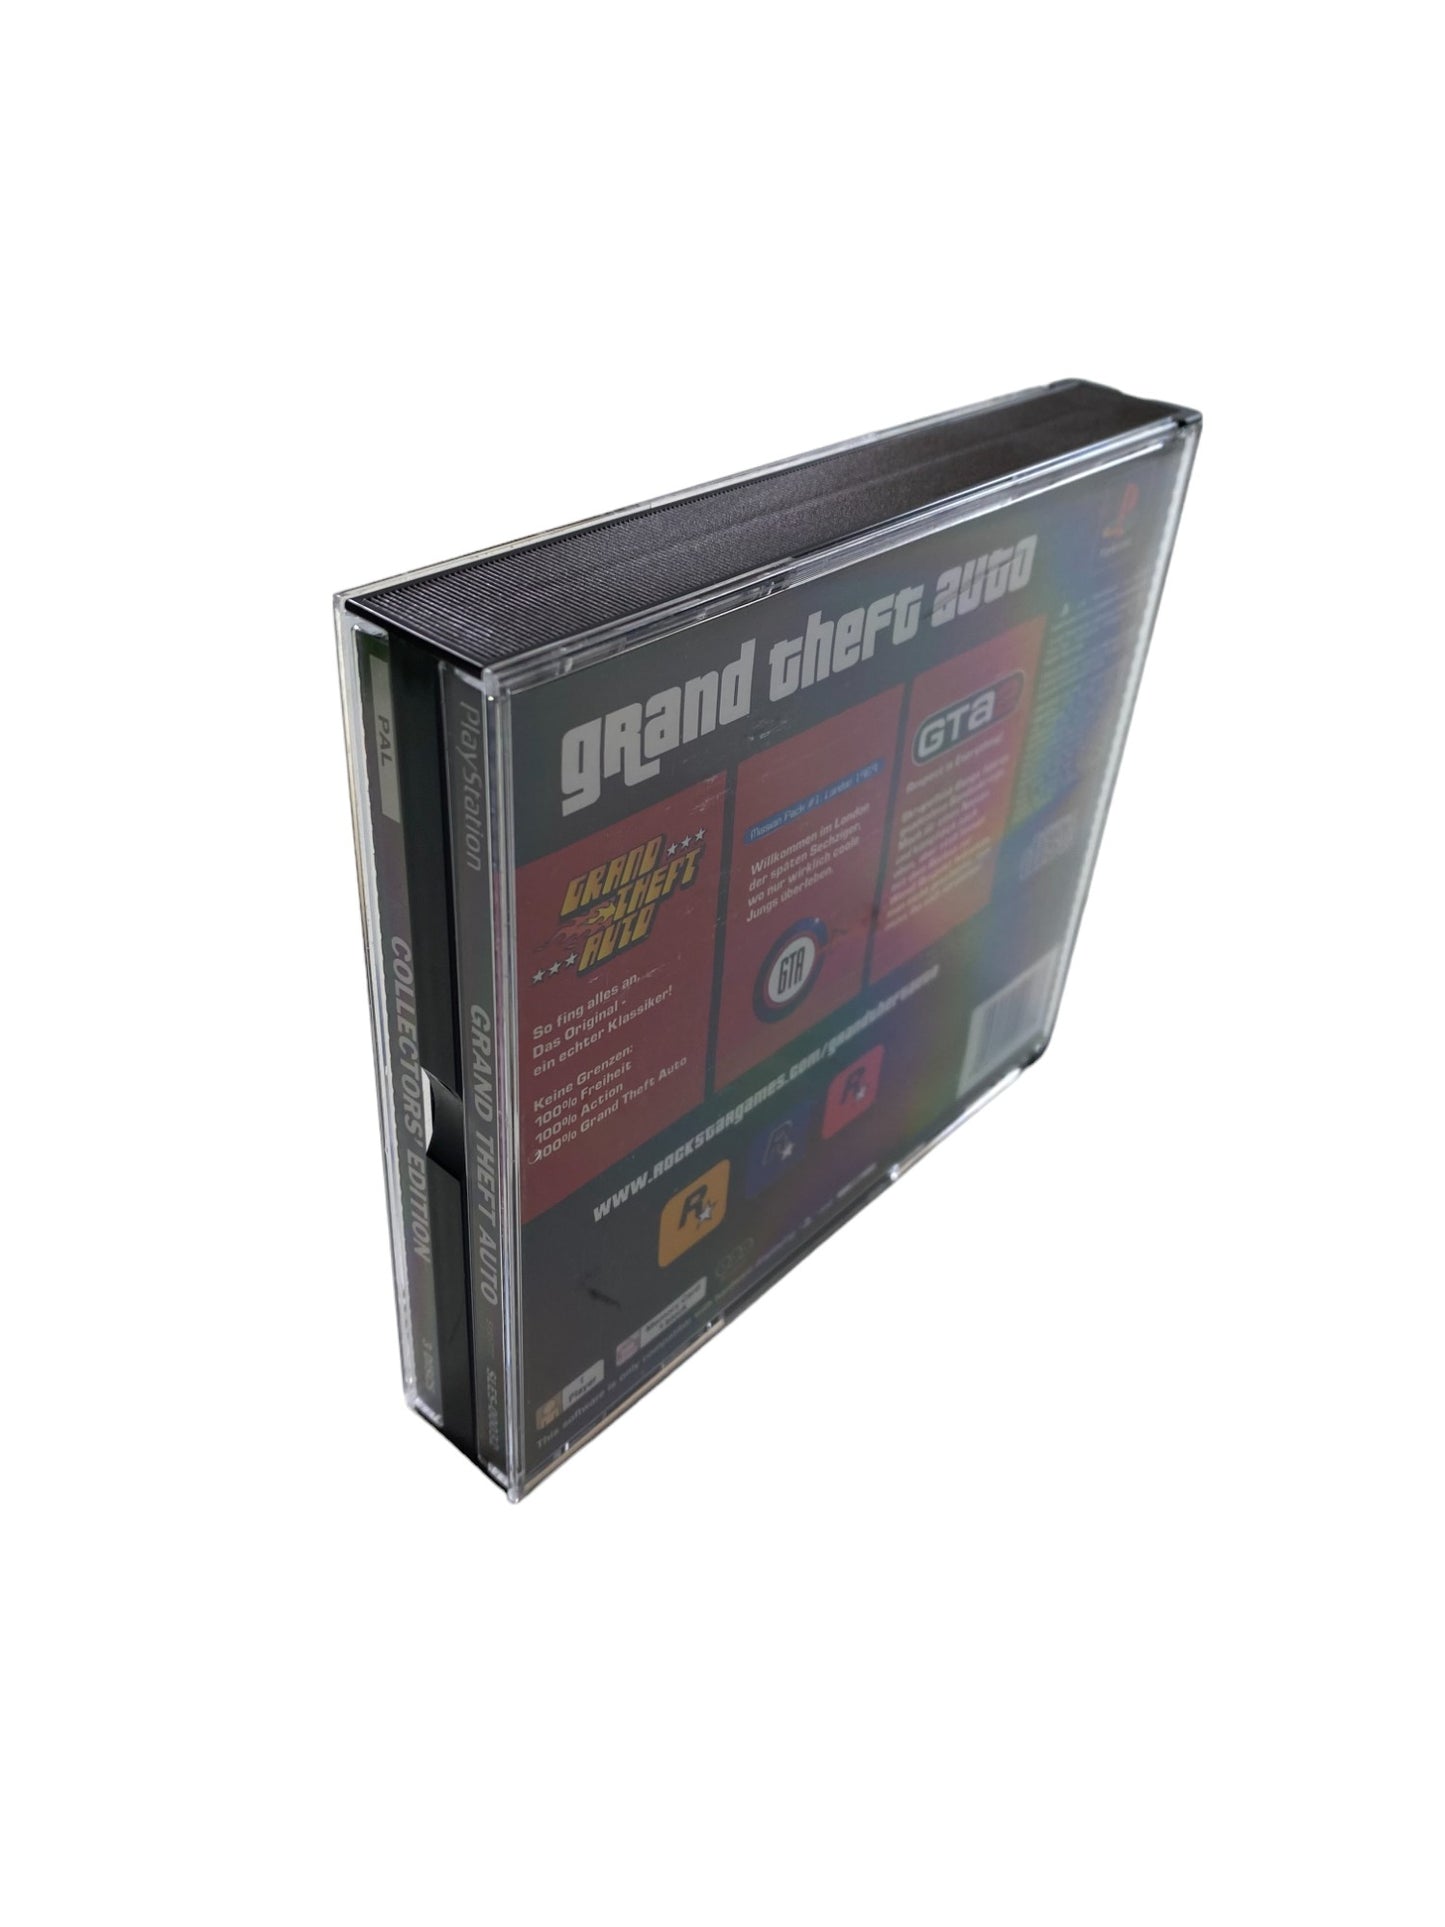 PS1 - Grand Theft Auto / GTA - Collector's Edition - Playstation 1 (CIB)